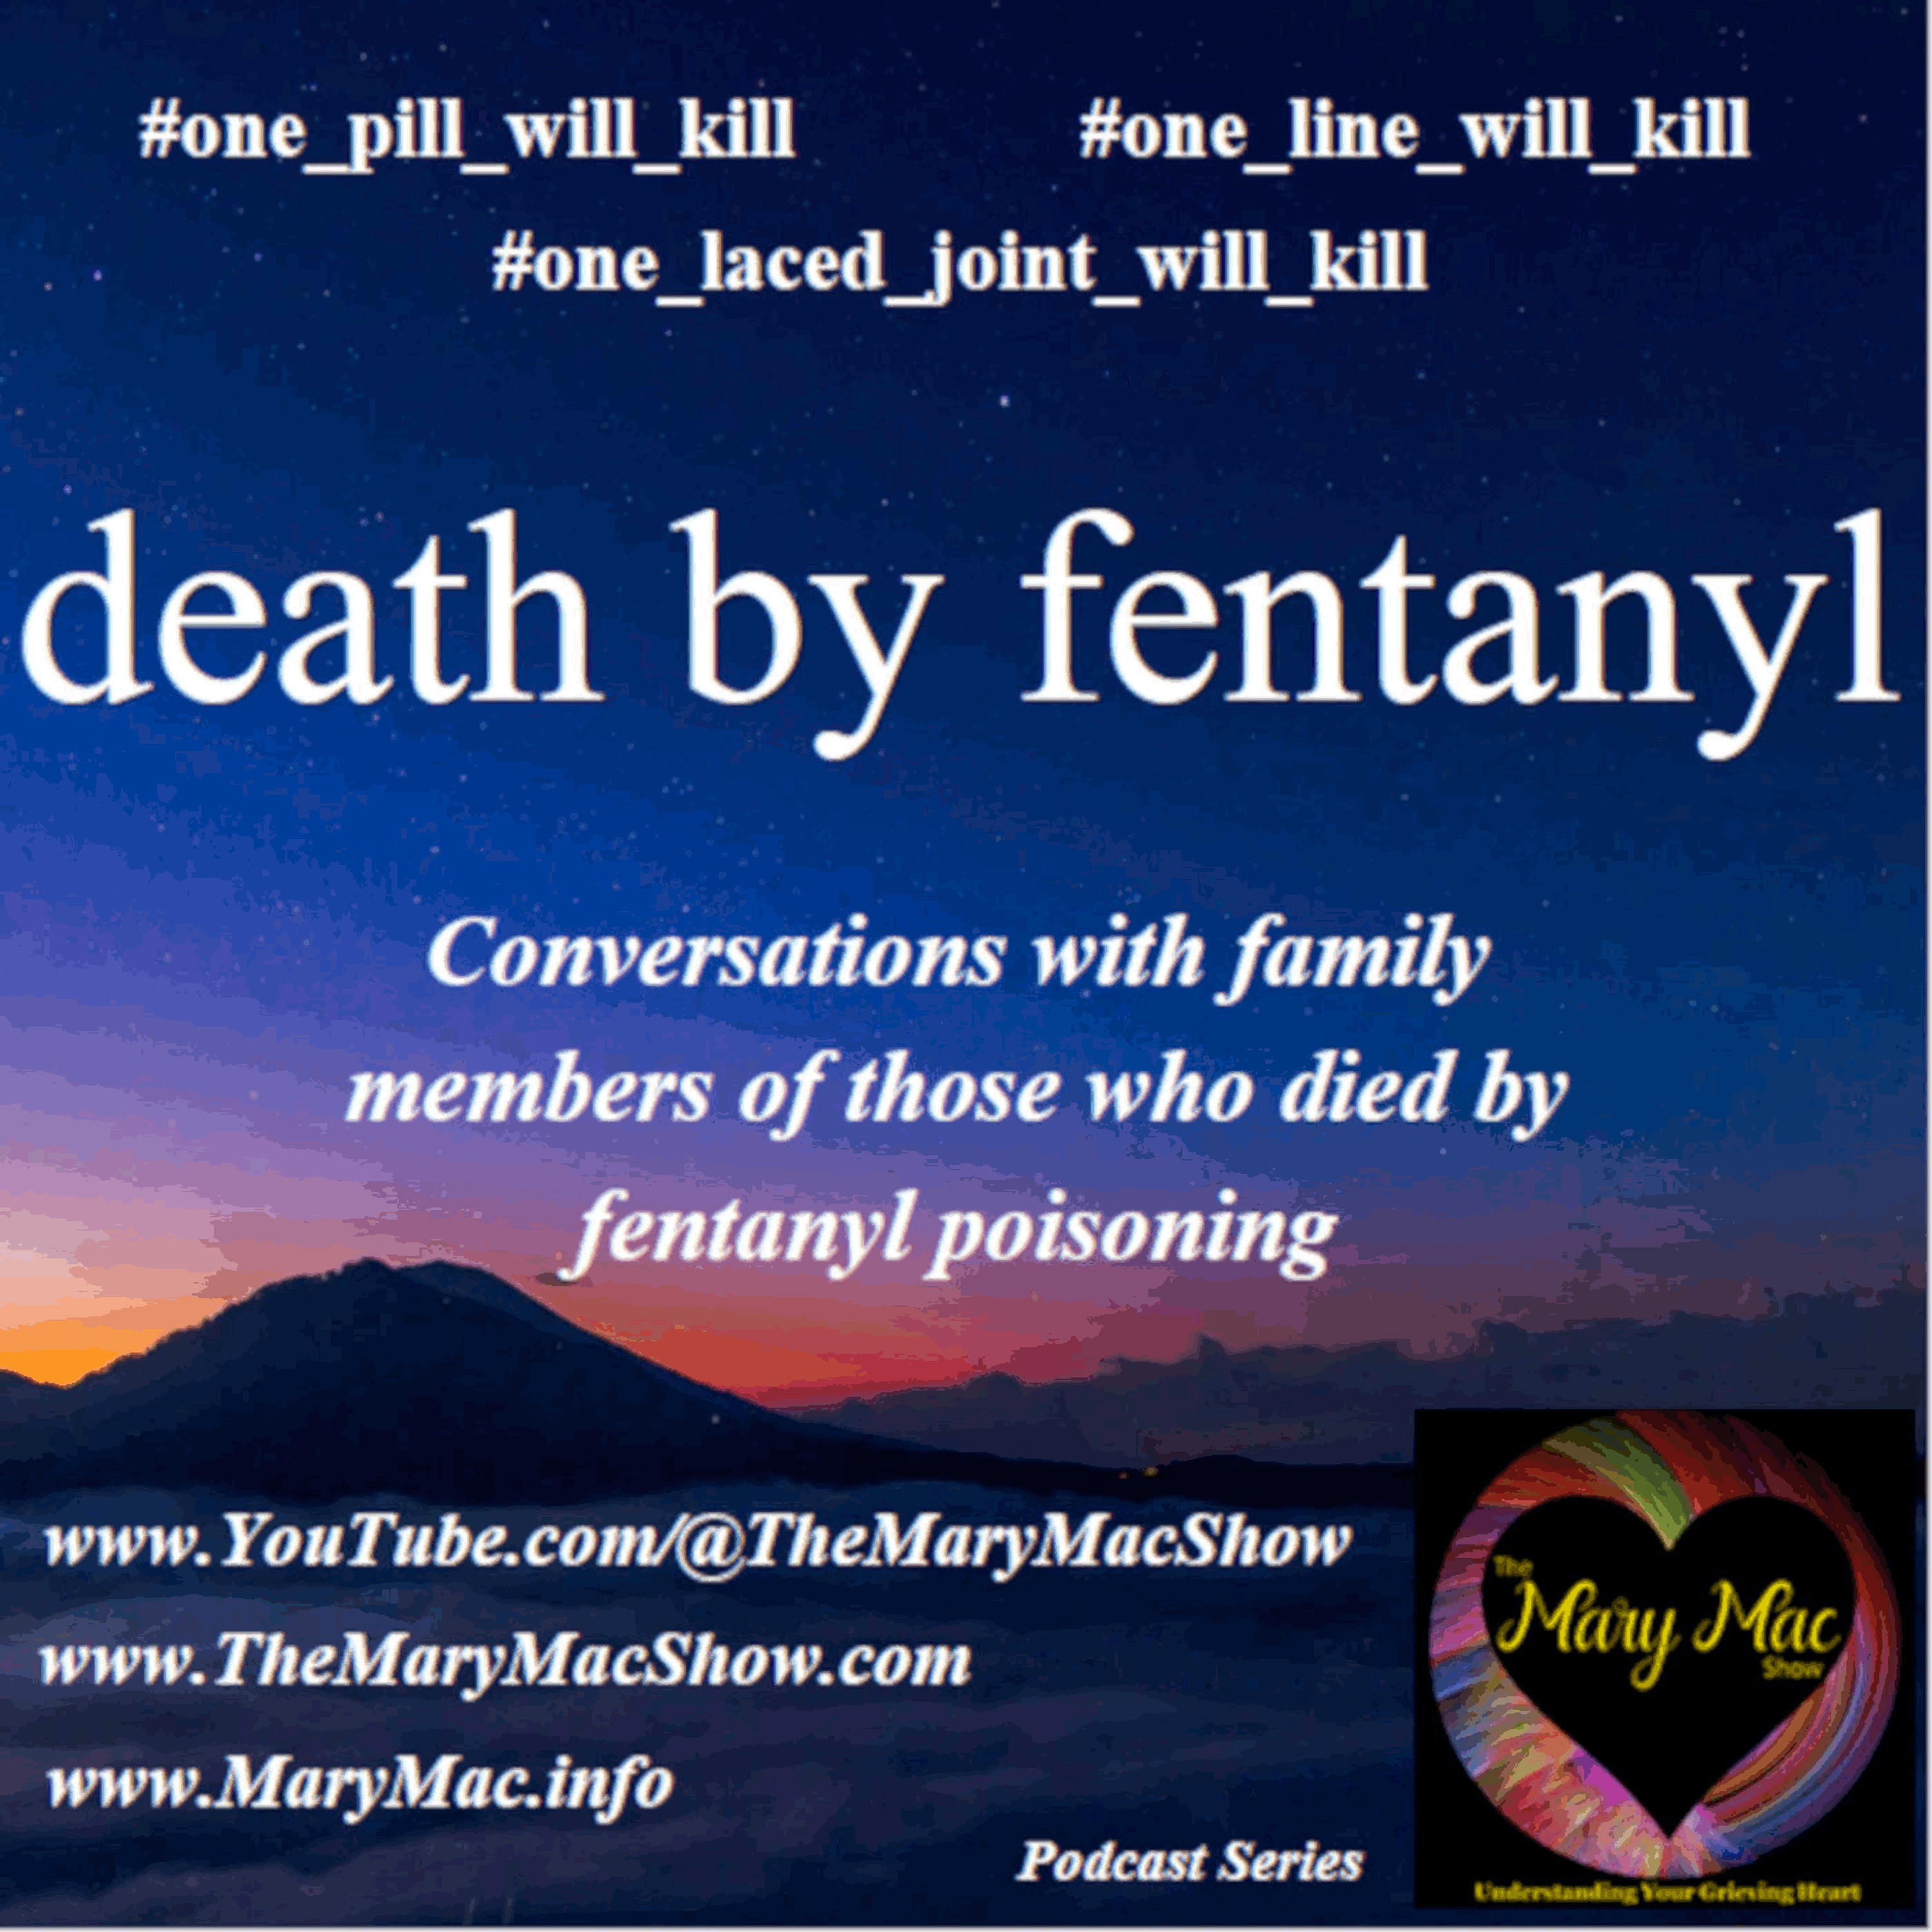 Death By Fentanyl Podcast Series | Ed Bisch’s 18 yo Son Eddie killed by ONE OxyContin Pill